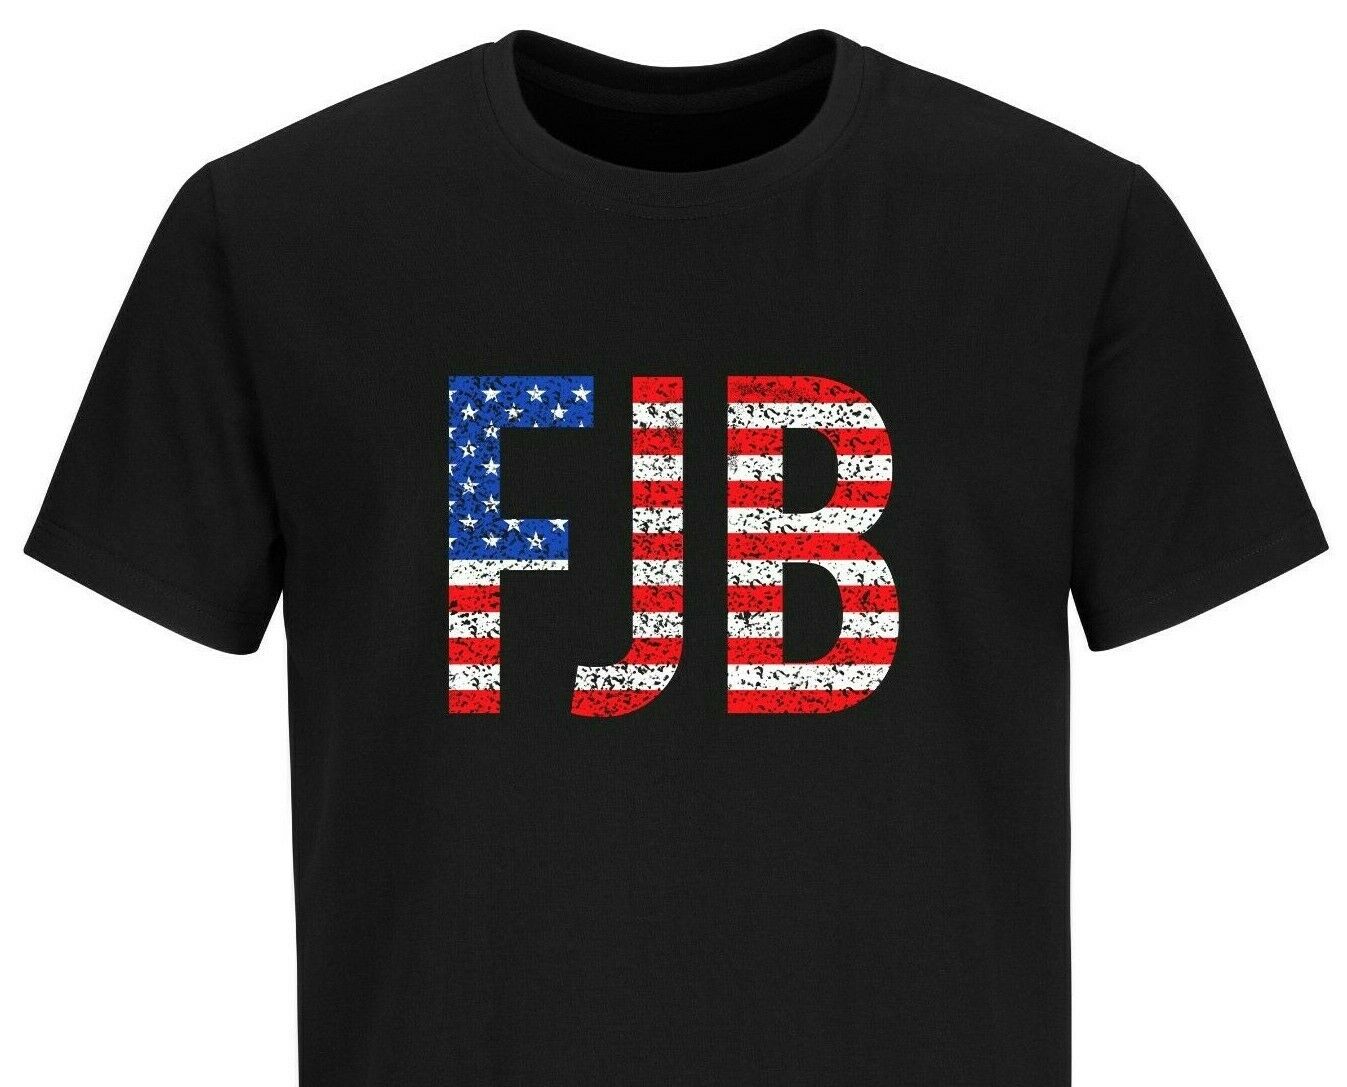 Let's Go Brandon Joe Biden Funny Humor T shirt Trump 2024 Political Shirts